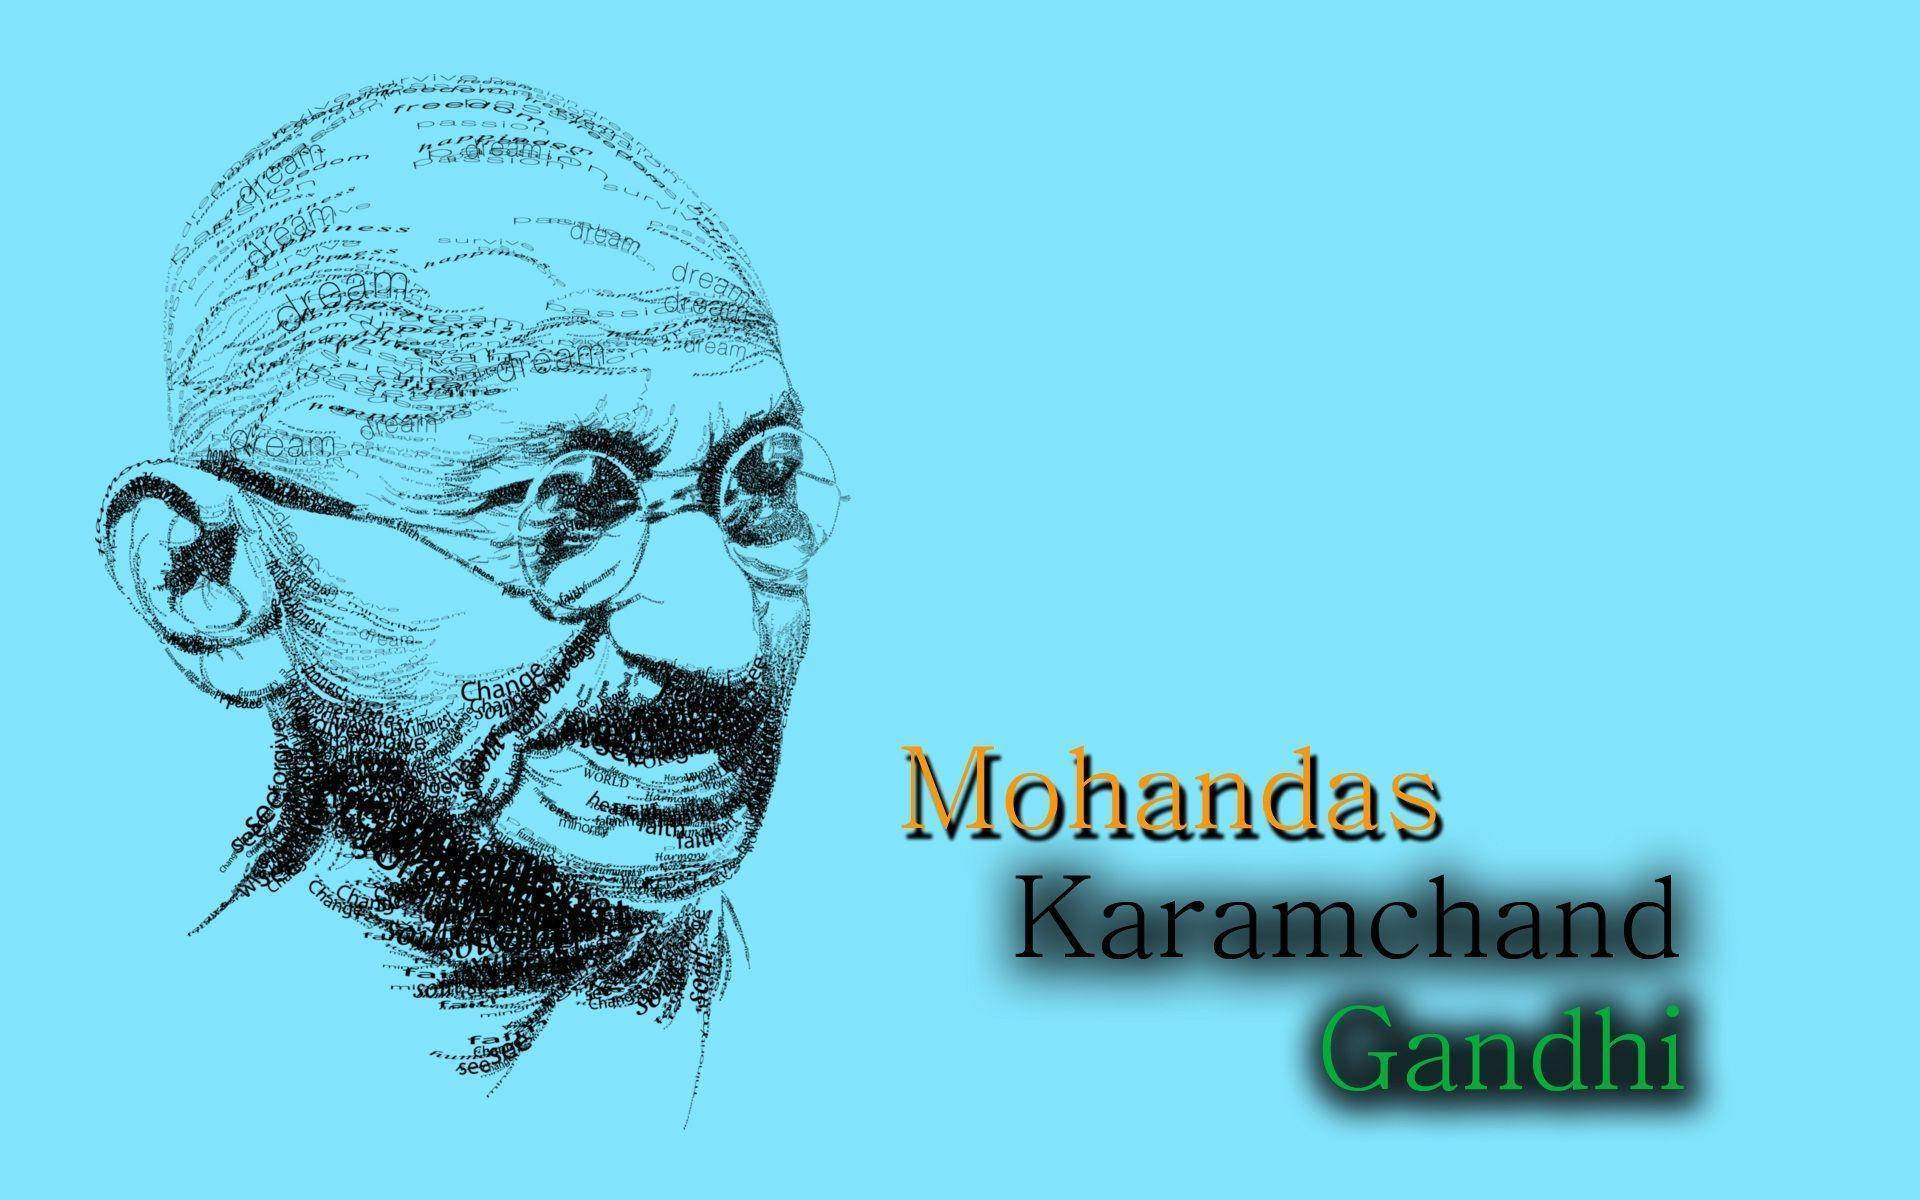 Mahatma Gandhi Monochrome Portrait